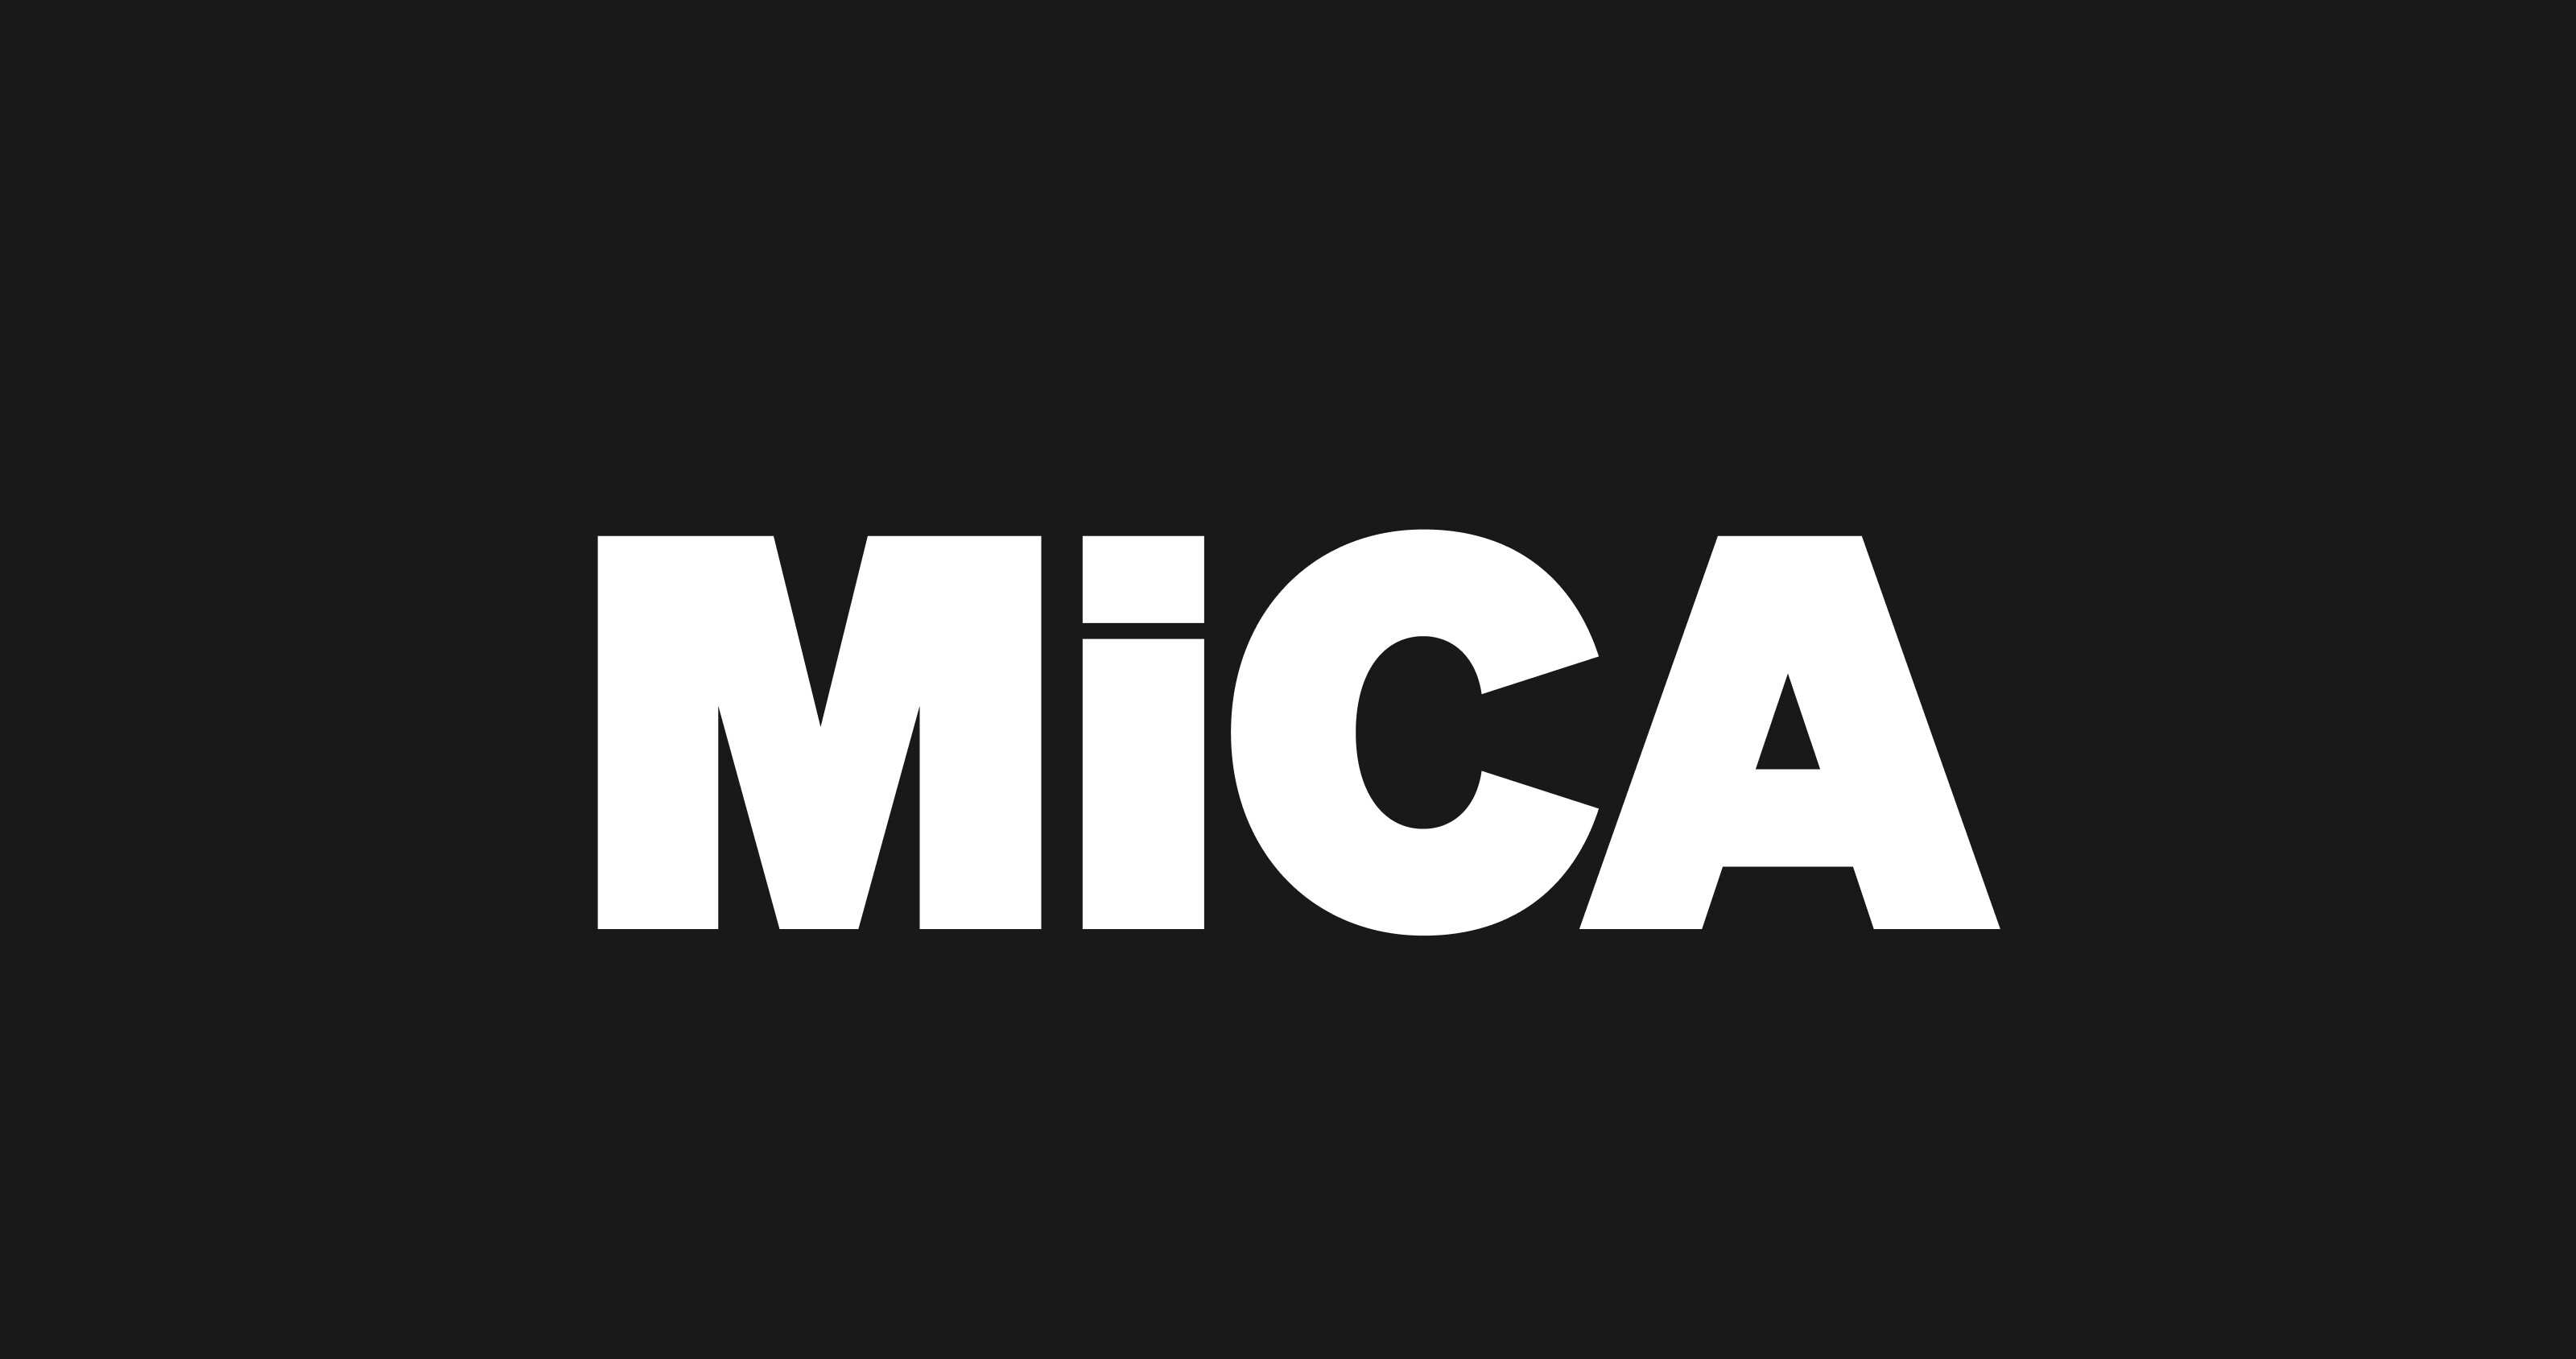 MiCA: A regulatory leap forward for crypto 